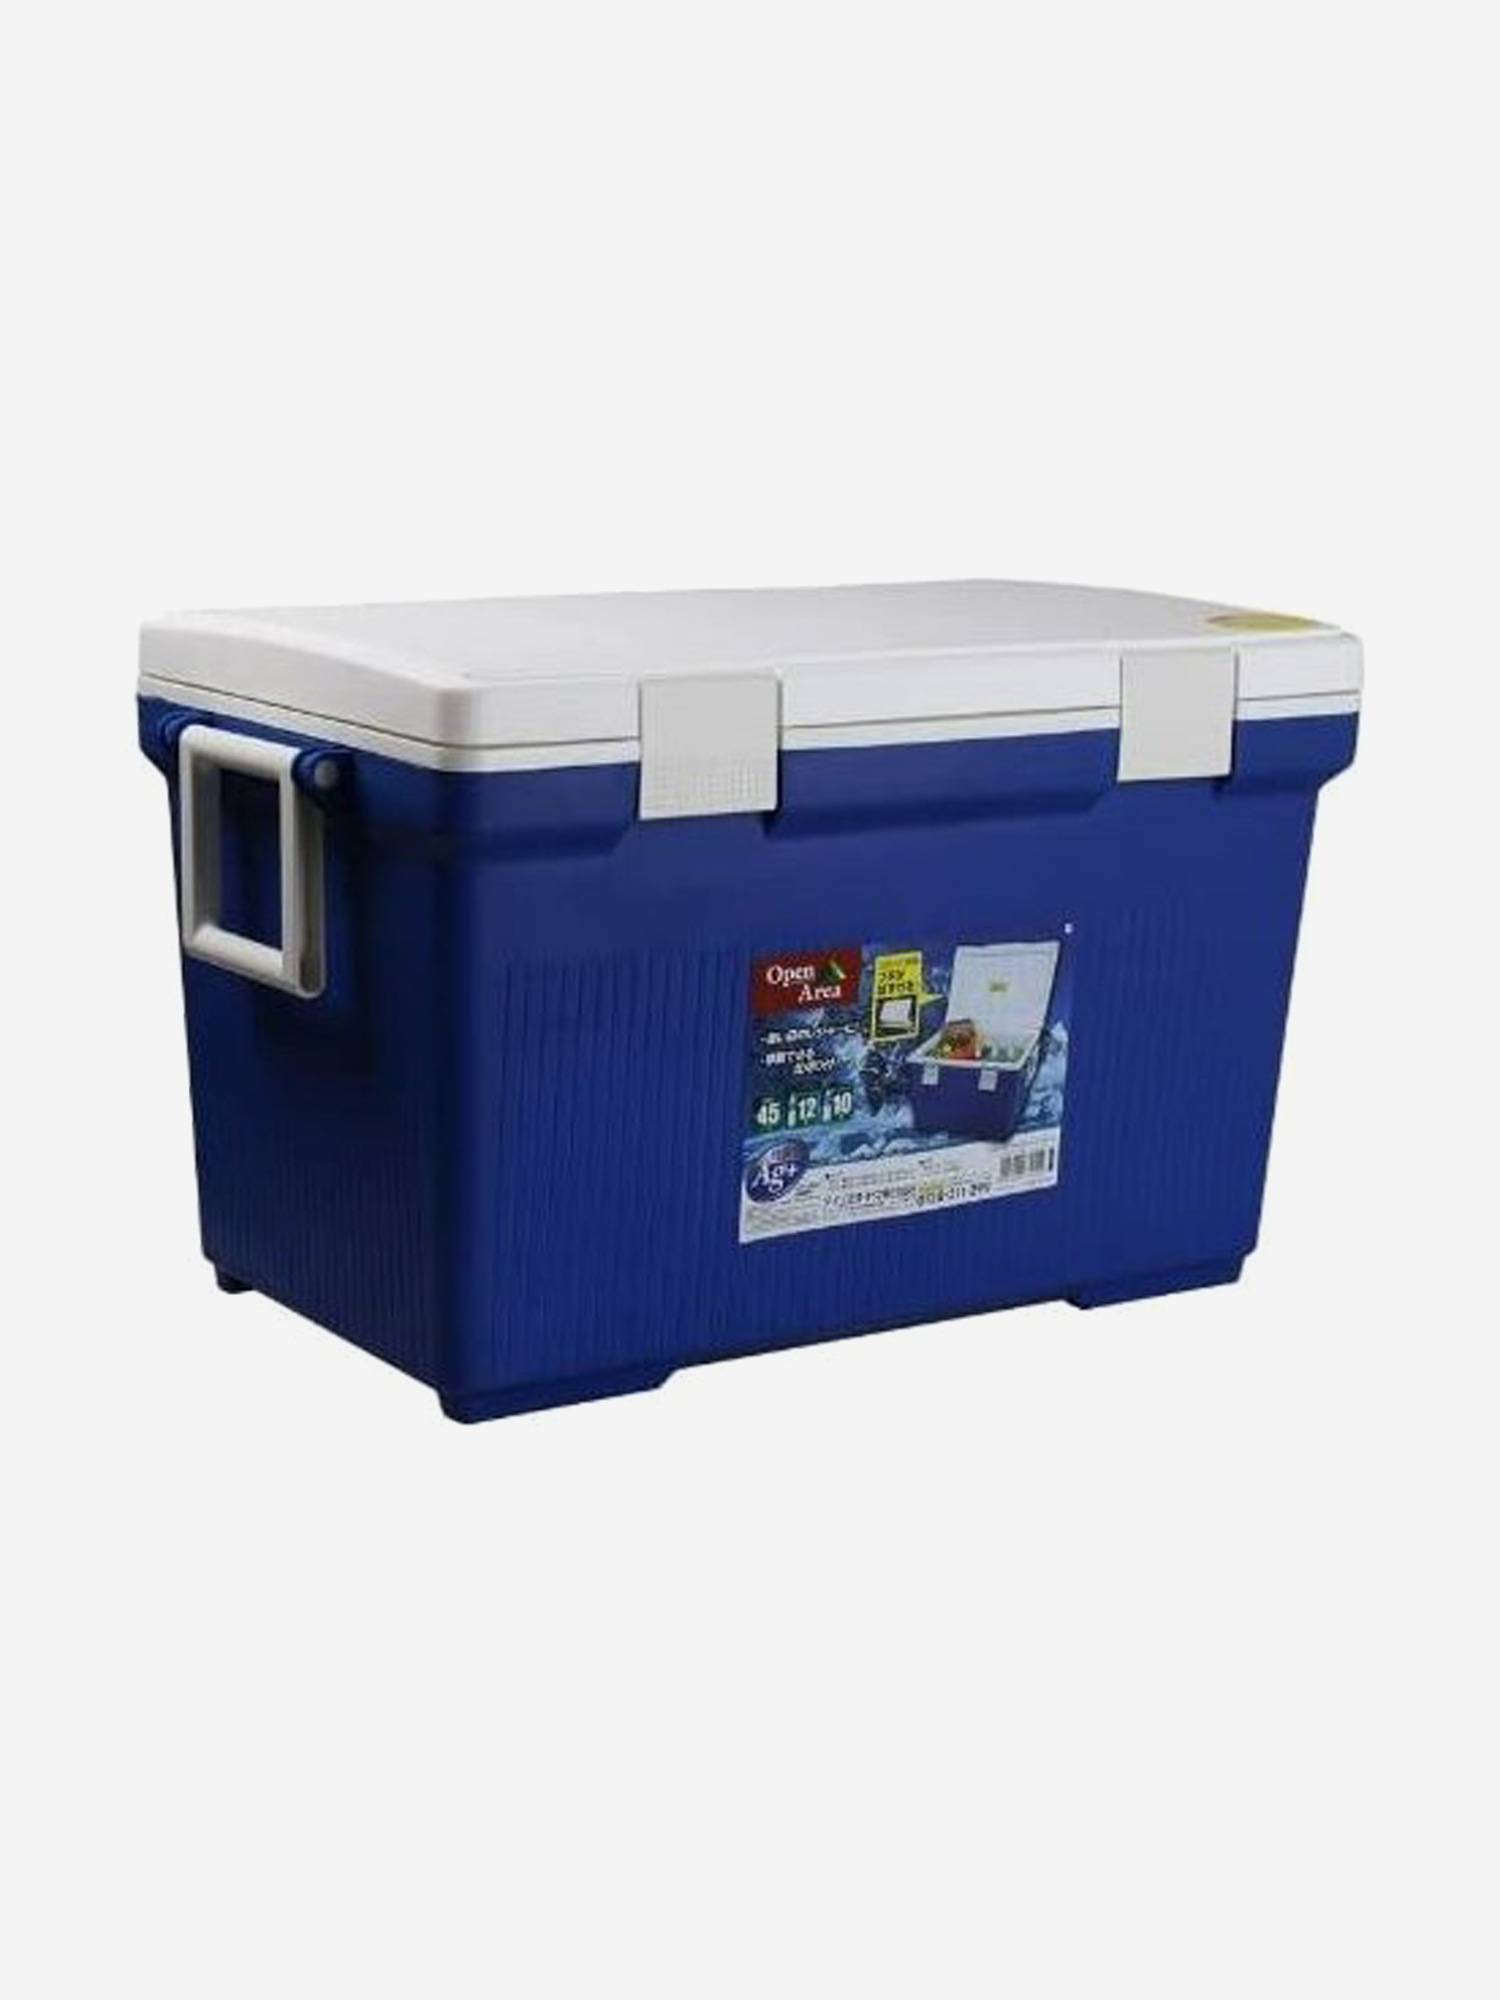 Термобокс IRIS OHYAMA Cooler Box CL-45, 45 литров, синий/белый, Синий термобокс shinwa holiday land cooler 48h синий синий